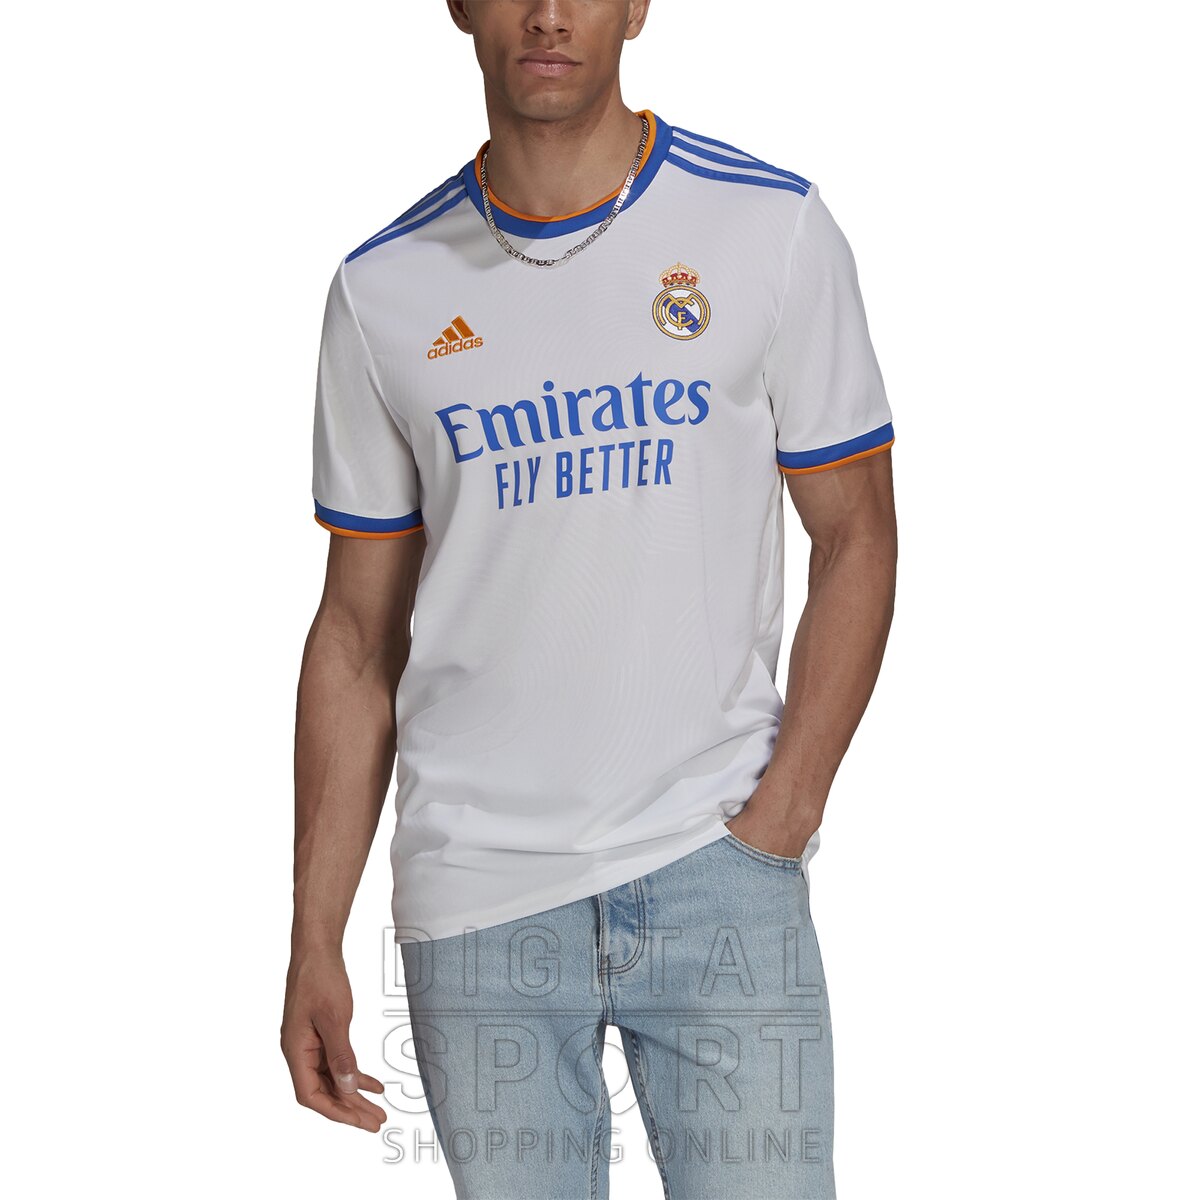 Adidas Camiseta Real Madrid 20/21 Blanco para Hombre